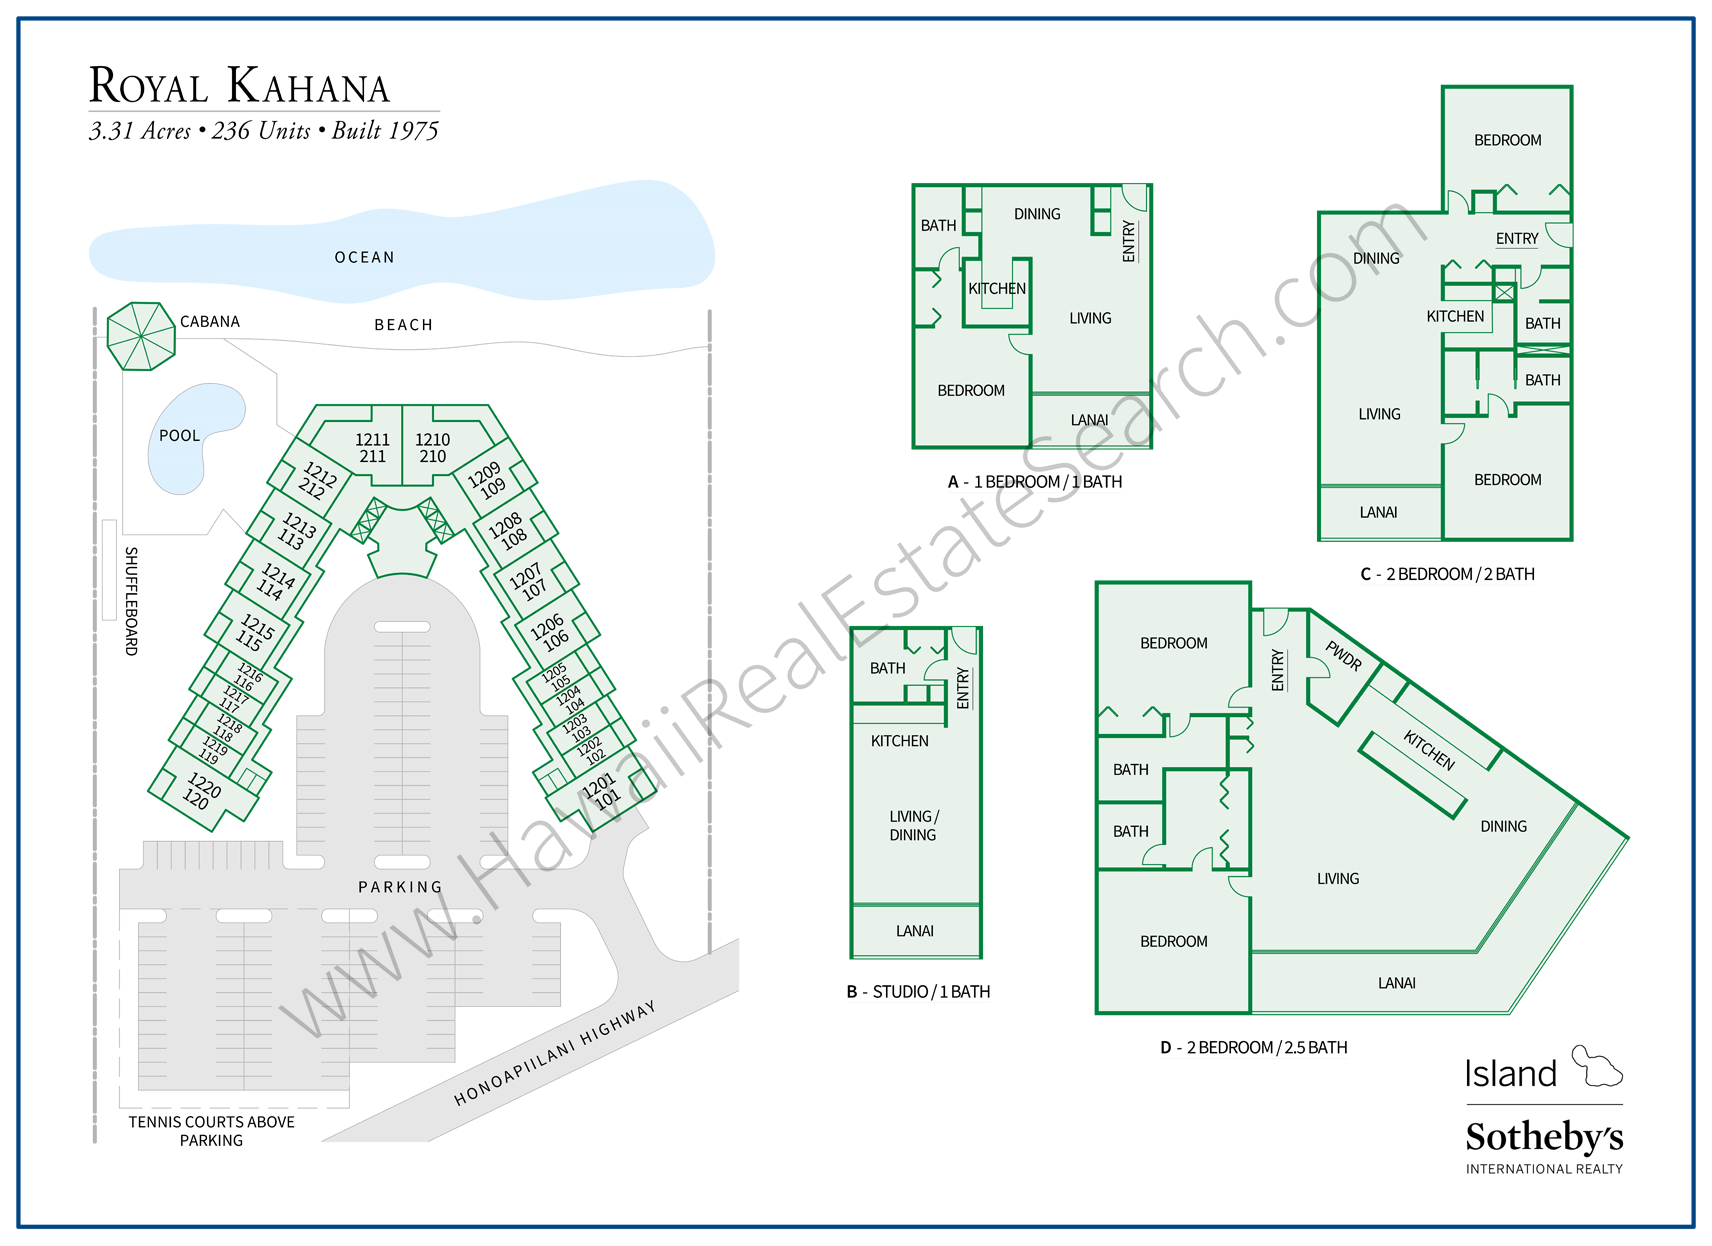 royal kahana map and floor plans